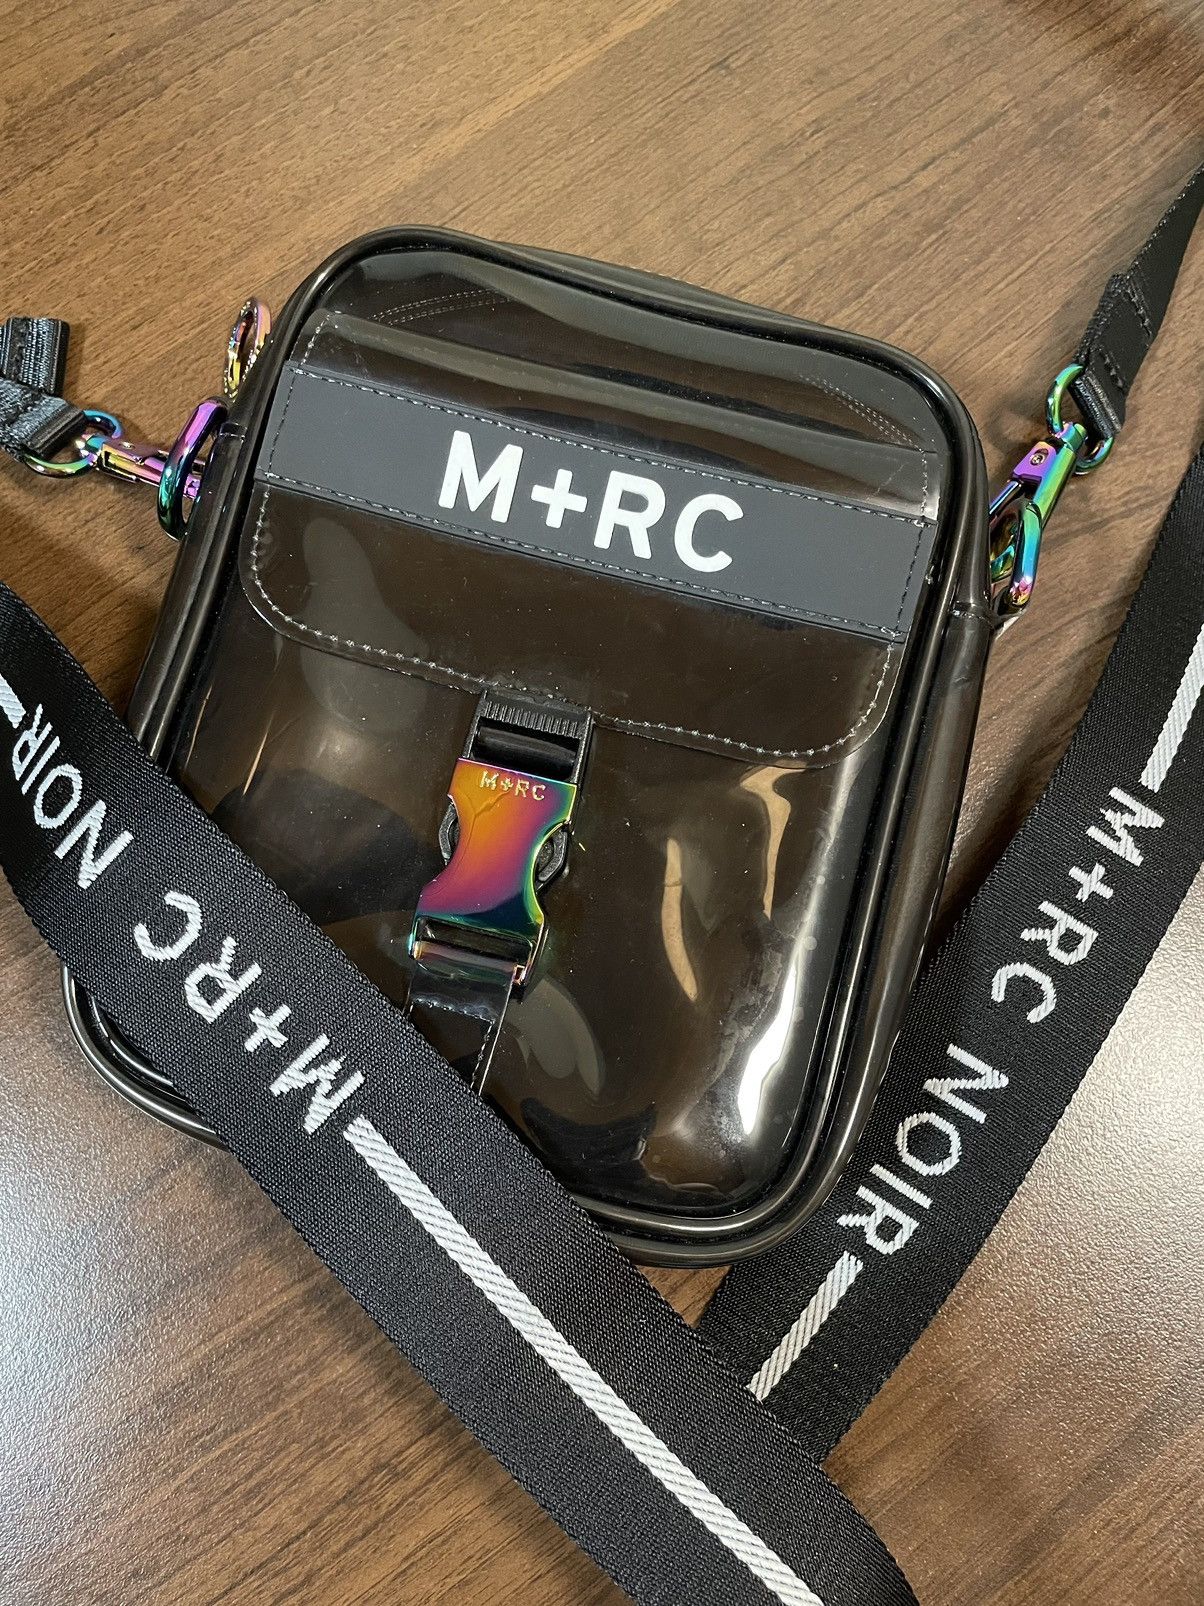 Men's M+Rc Noir Bags u0026 Luggage | Grailed